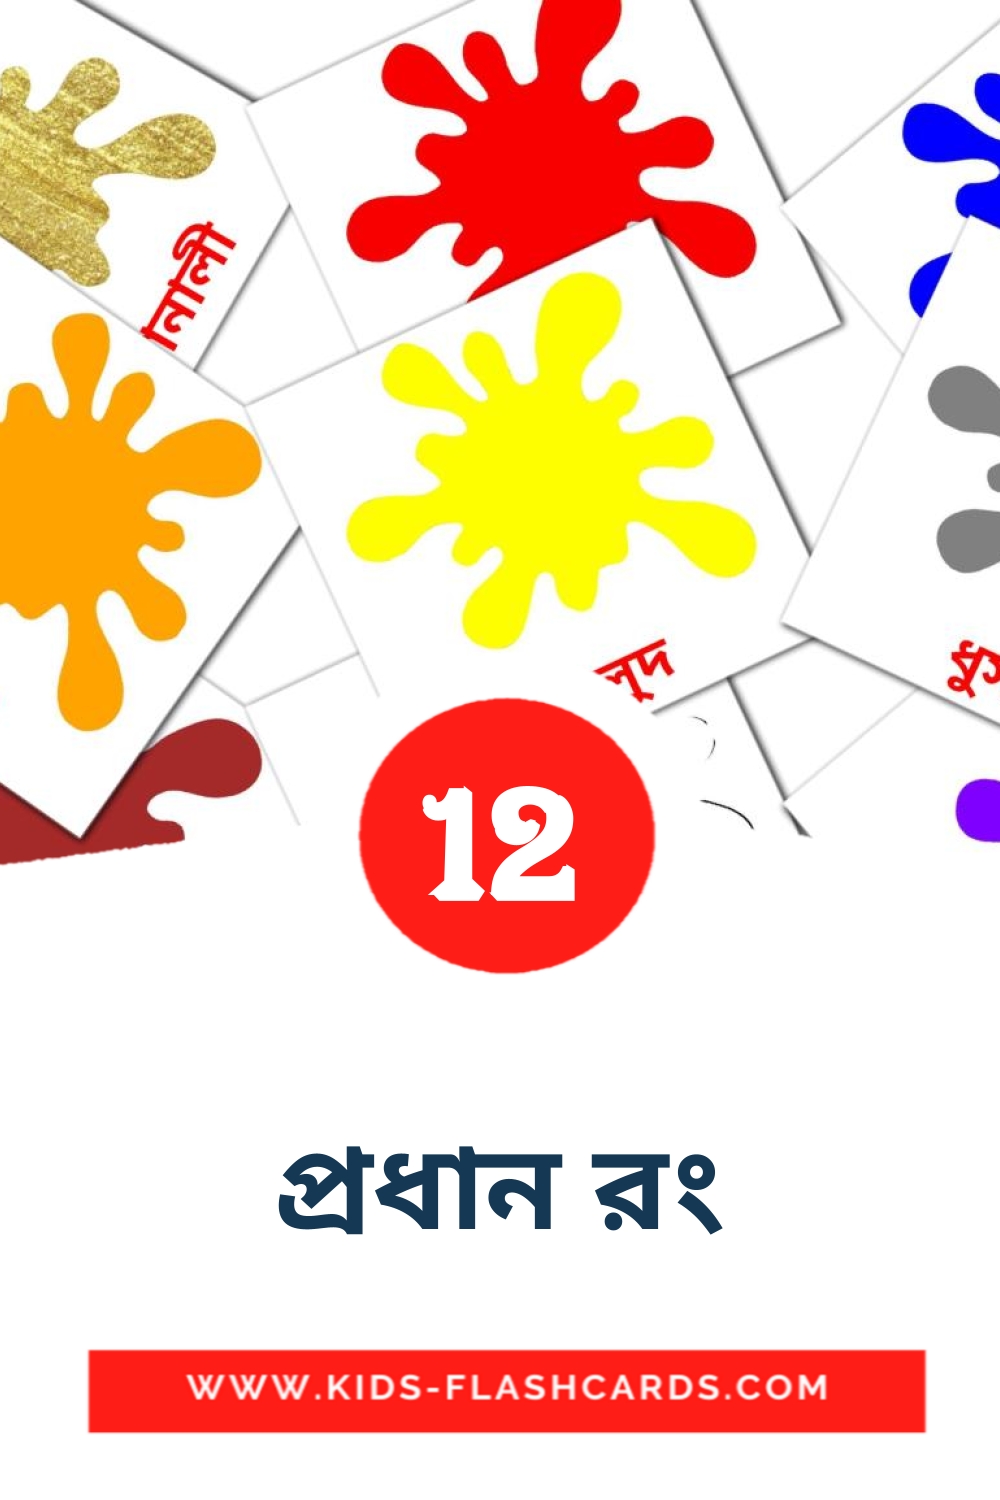 12 প্রধান রং Bildkarten für den Kindergarten auf Bengalisch